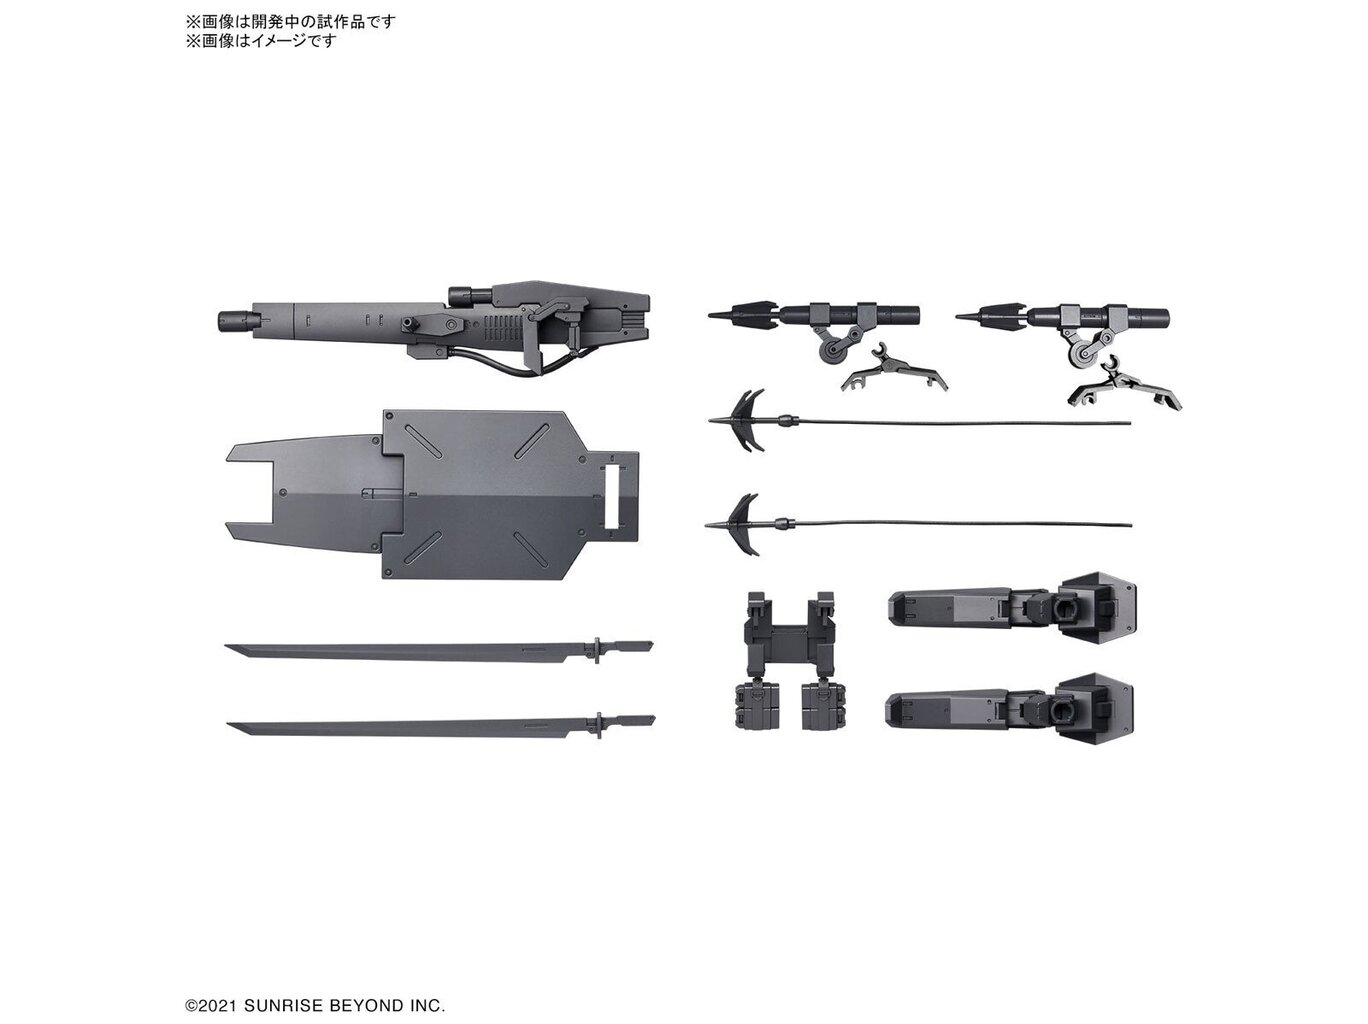 Surenkamas modelis Bandai HG Kyokai Senki Amaim Warrior at the Borderline Weapon Set 3, 65093 цена и информация | Konstruktoriai ir kaladėlės | pigu.lt